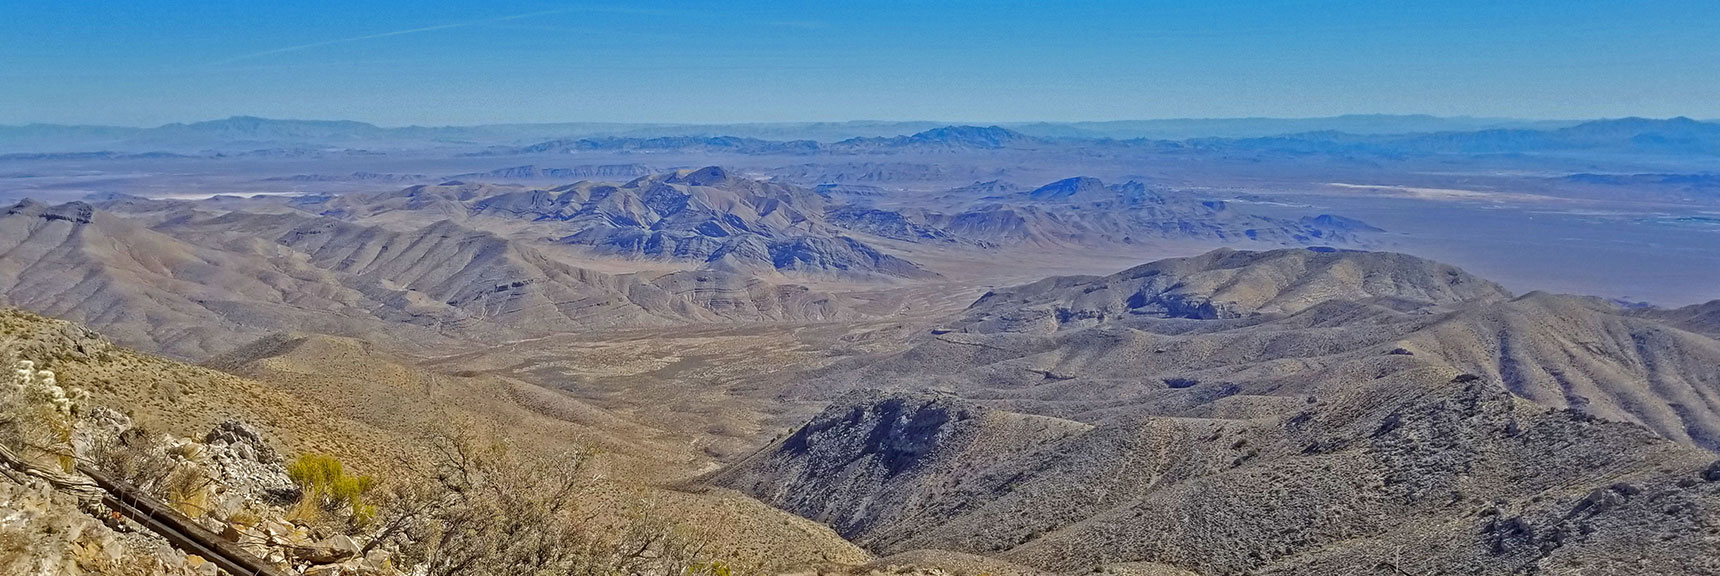 View Toward Southern Lake Mead Area and Wilderness Between. | Gass Peak Grand Crossing | Desert National Wildlife Refuge to Centennial Hills Las Vegas via Gass Peak Summit by Foot